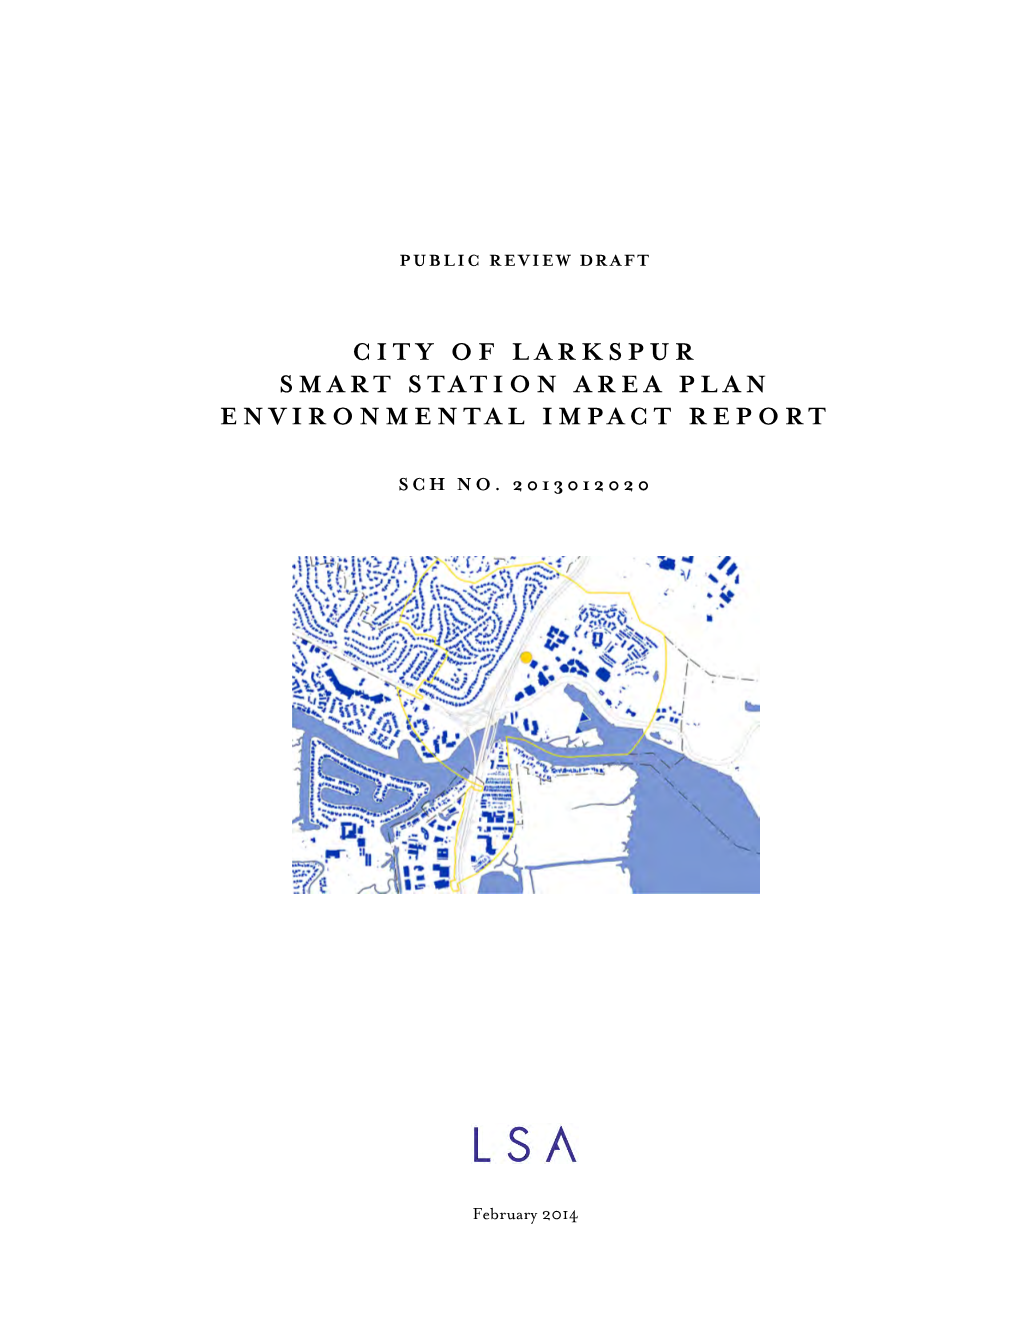 City of Larkspur Smart Station Area Plan Environmental Impact Report